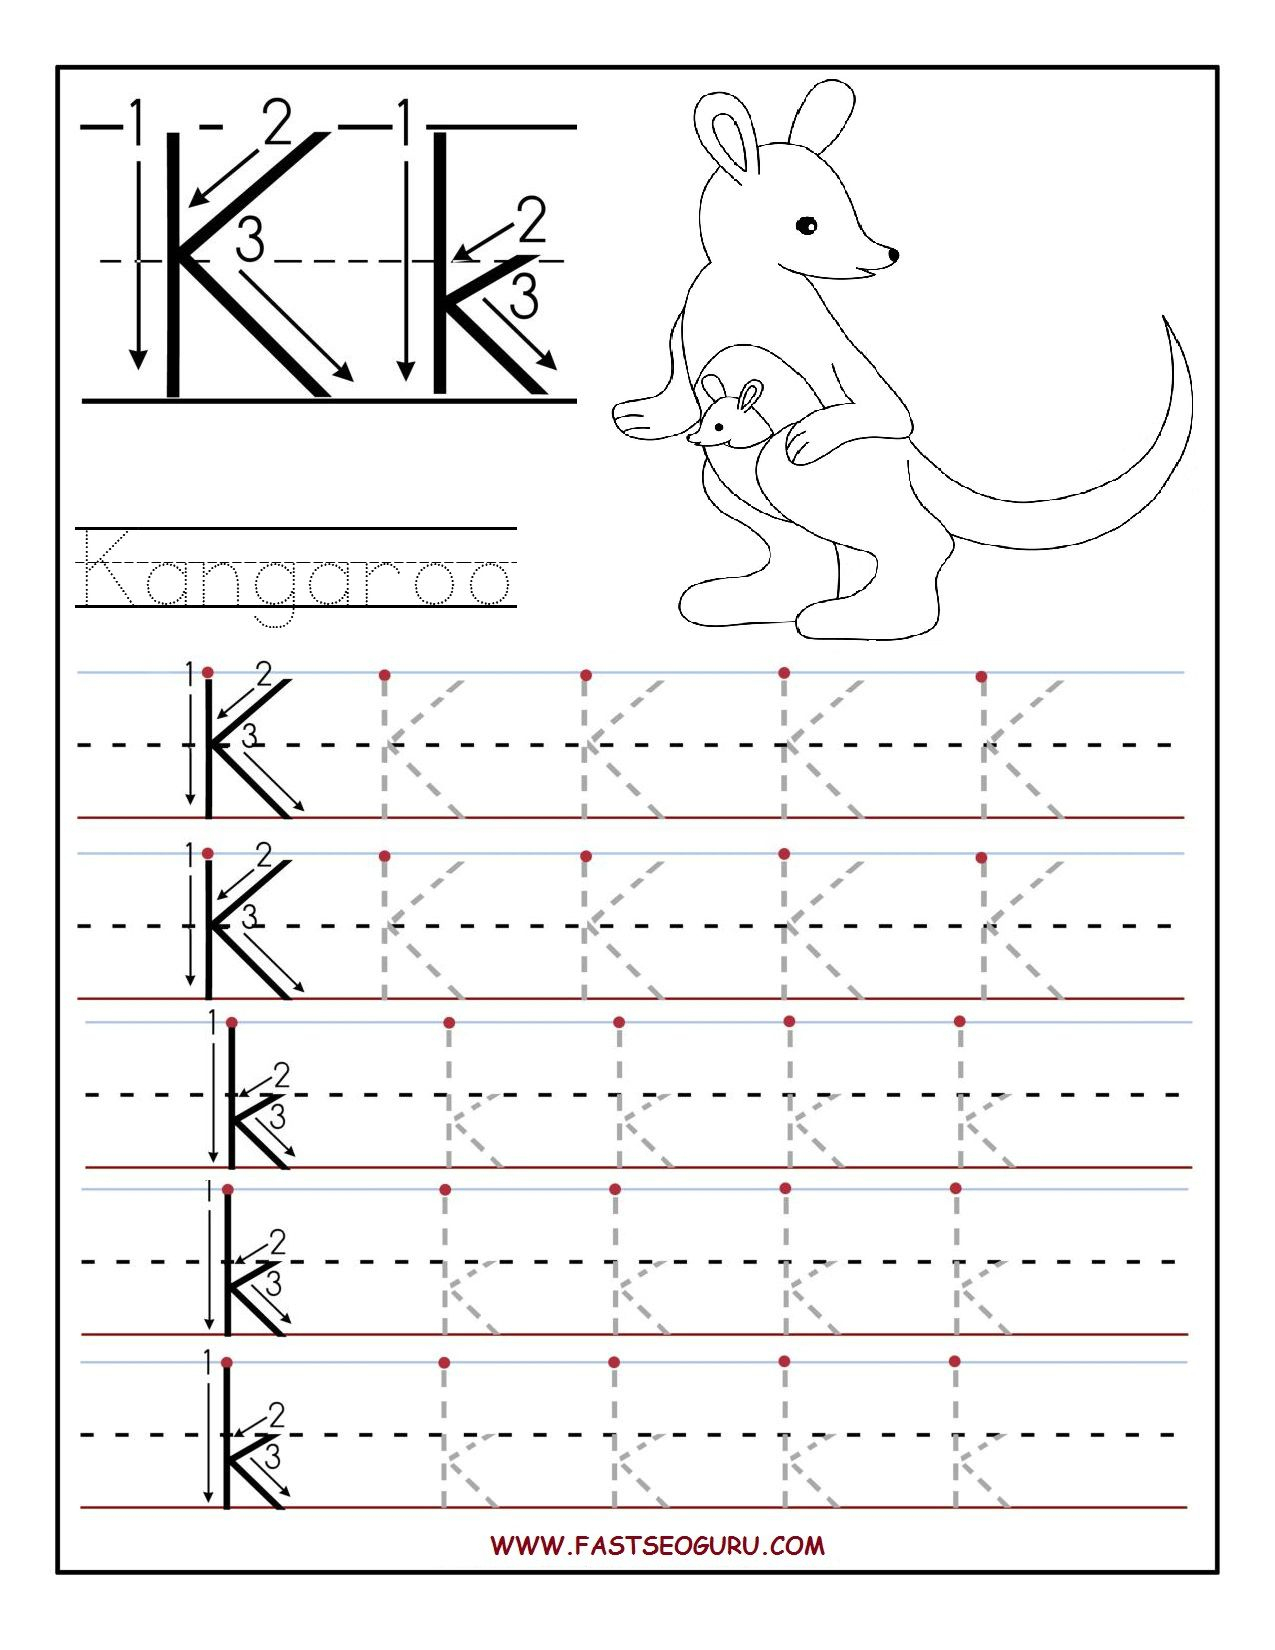 Printable Letter K Tracing Worksheets For Preschool | Learning | Free Printable Letter K Worksheets